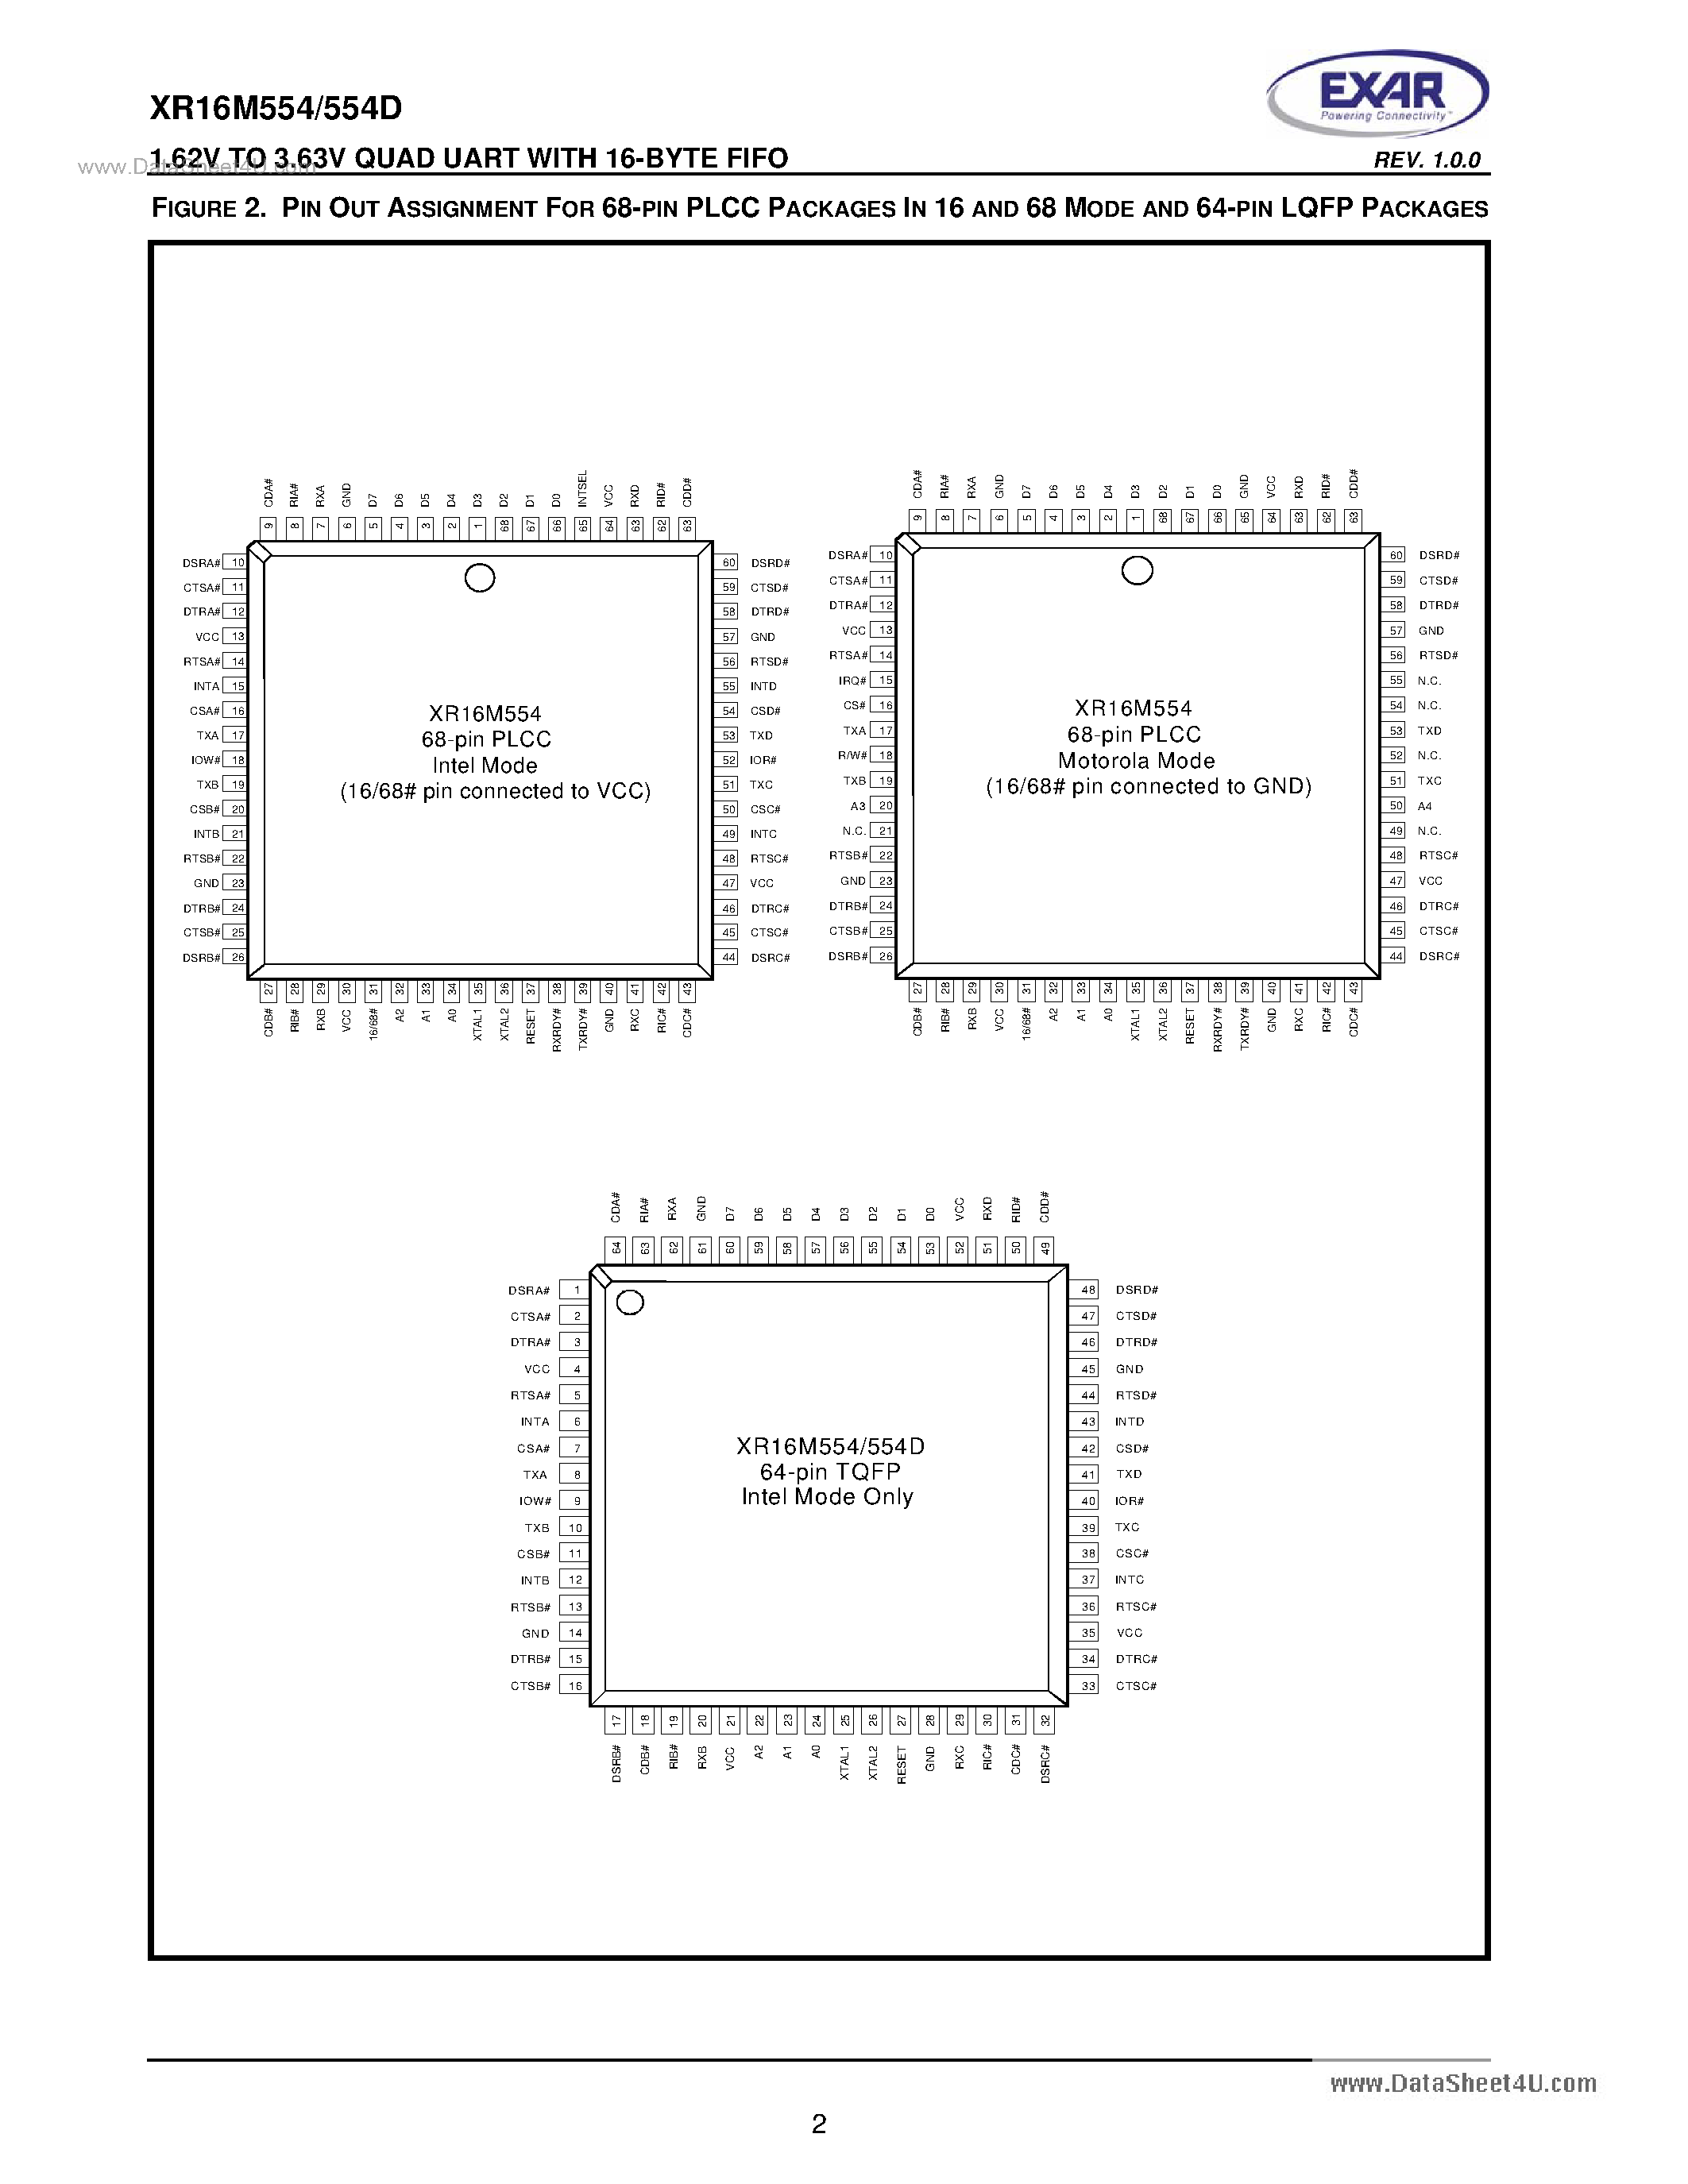 Datasheet XR16M554 - 1.62V To 3.63V Quad UART page 2